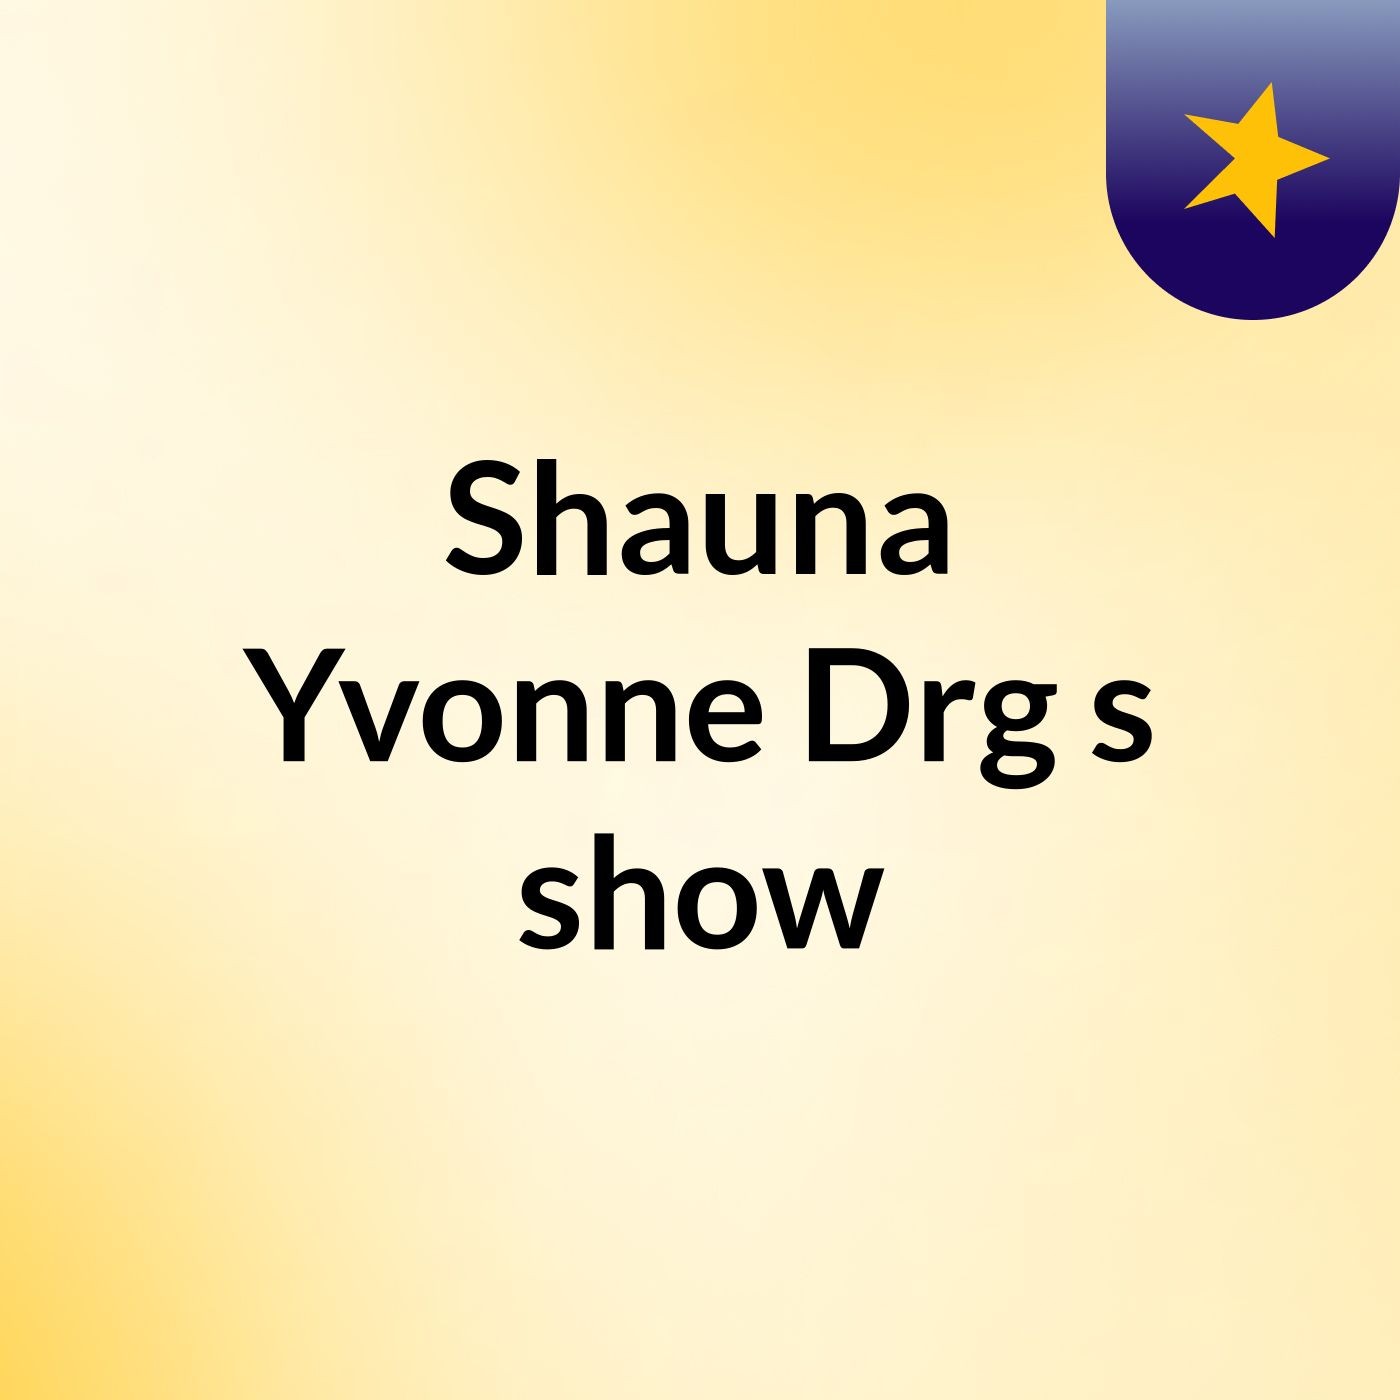 Shauna Yvonne Drg's show